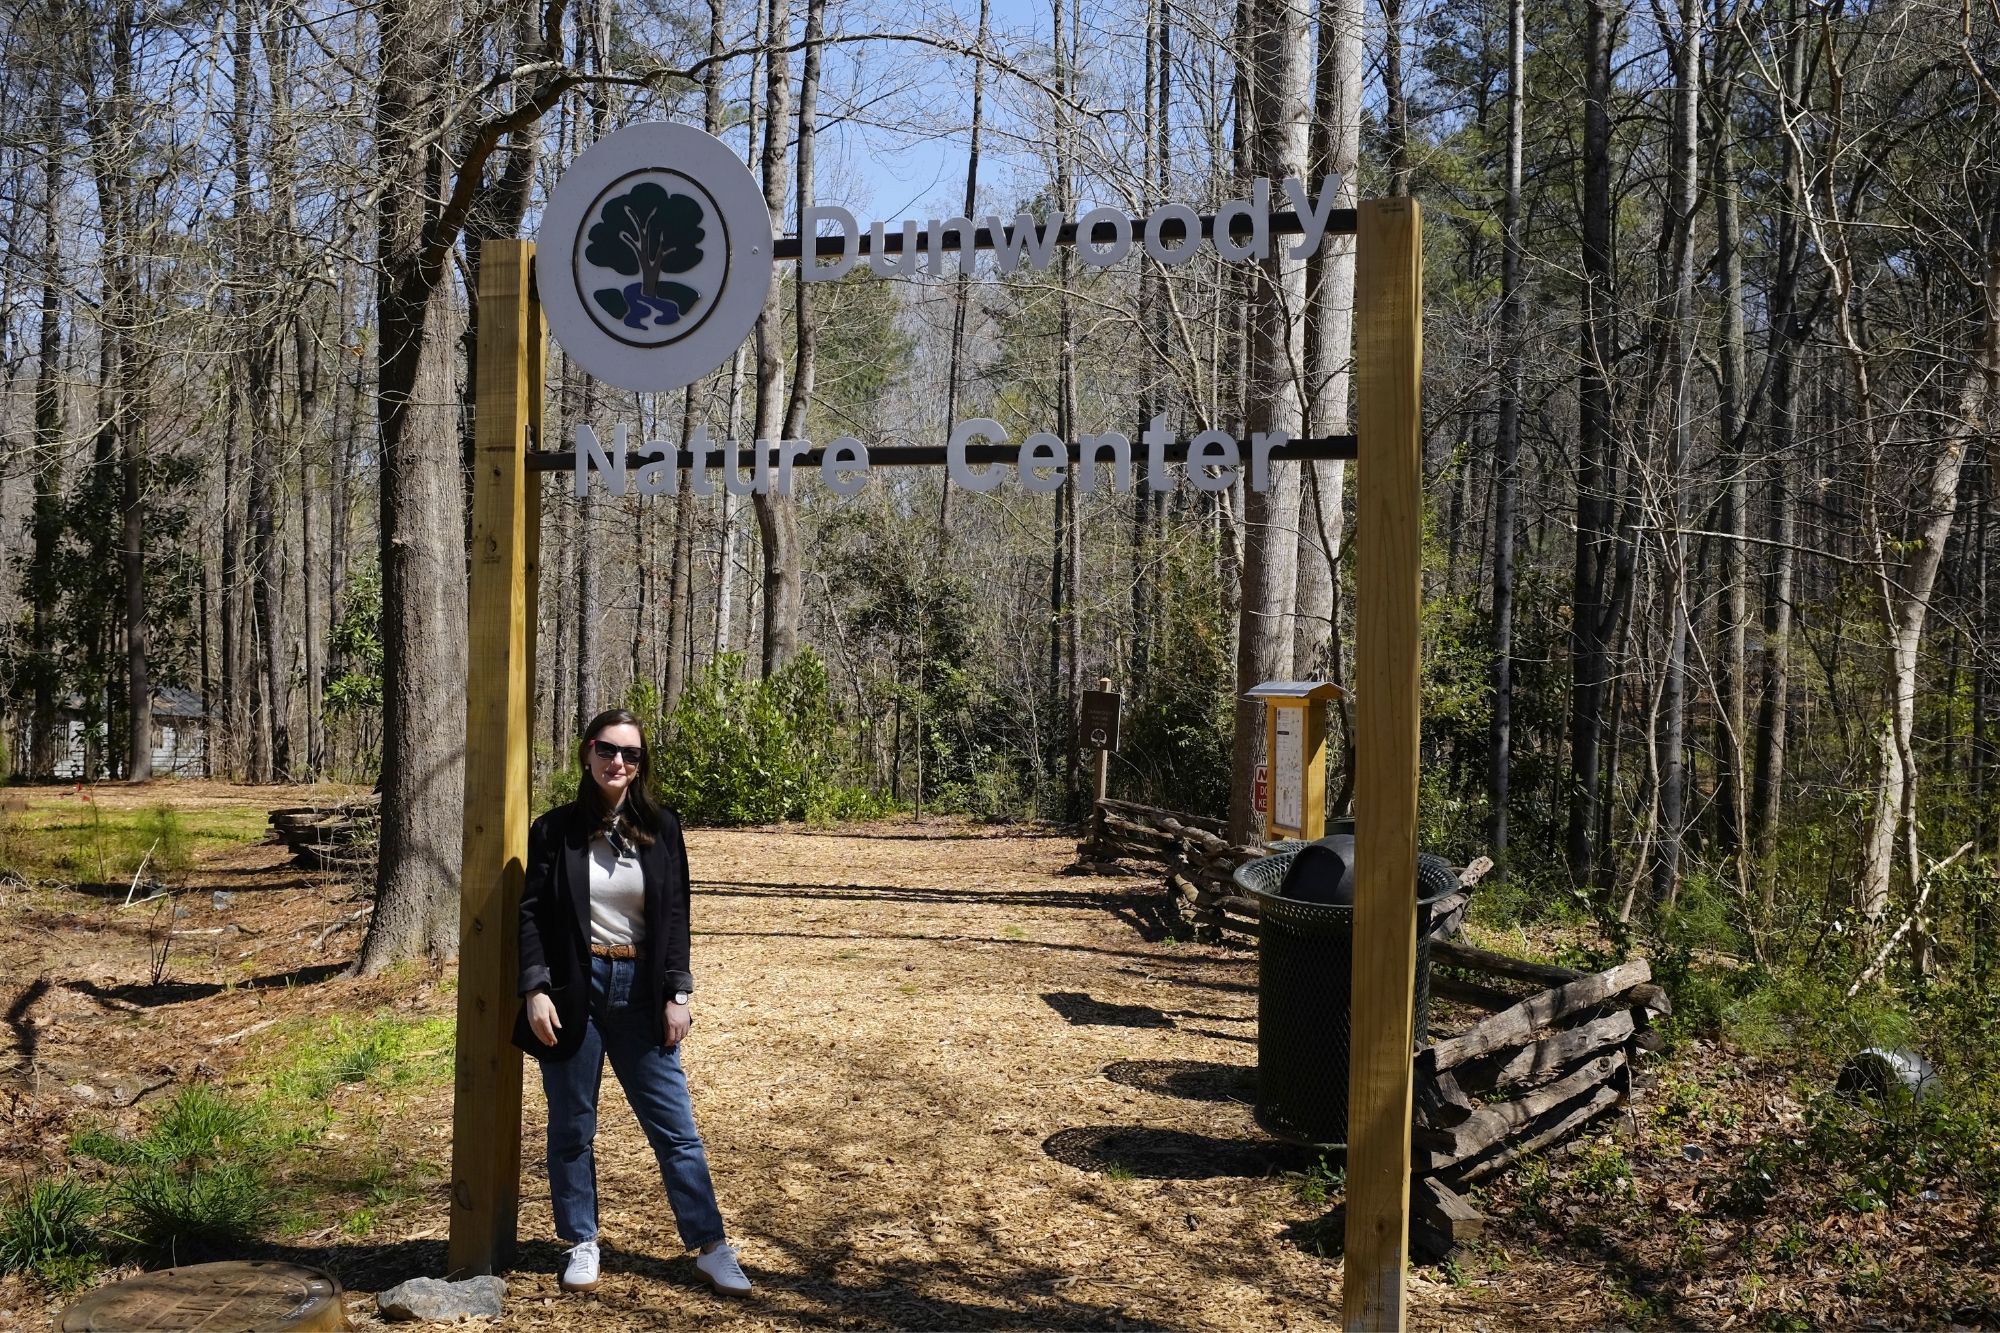 Alyssa stands under the Dunwoody Nature Center sign